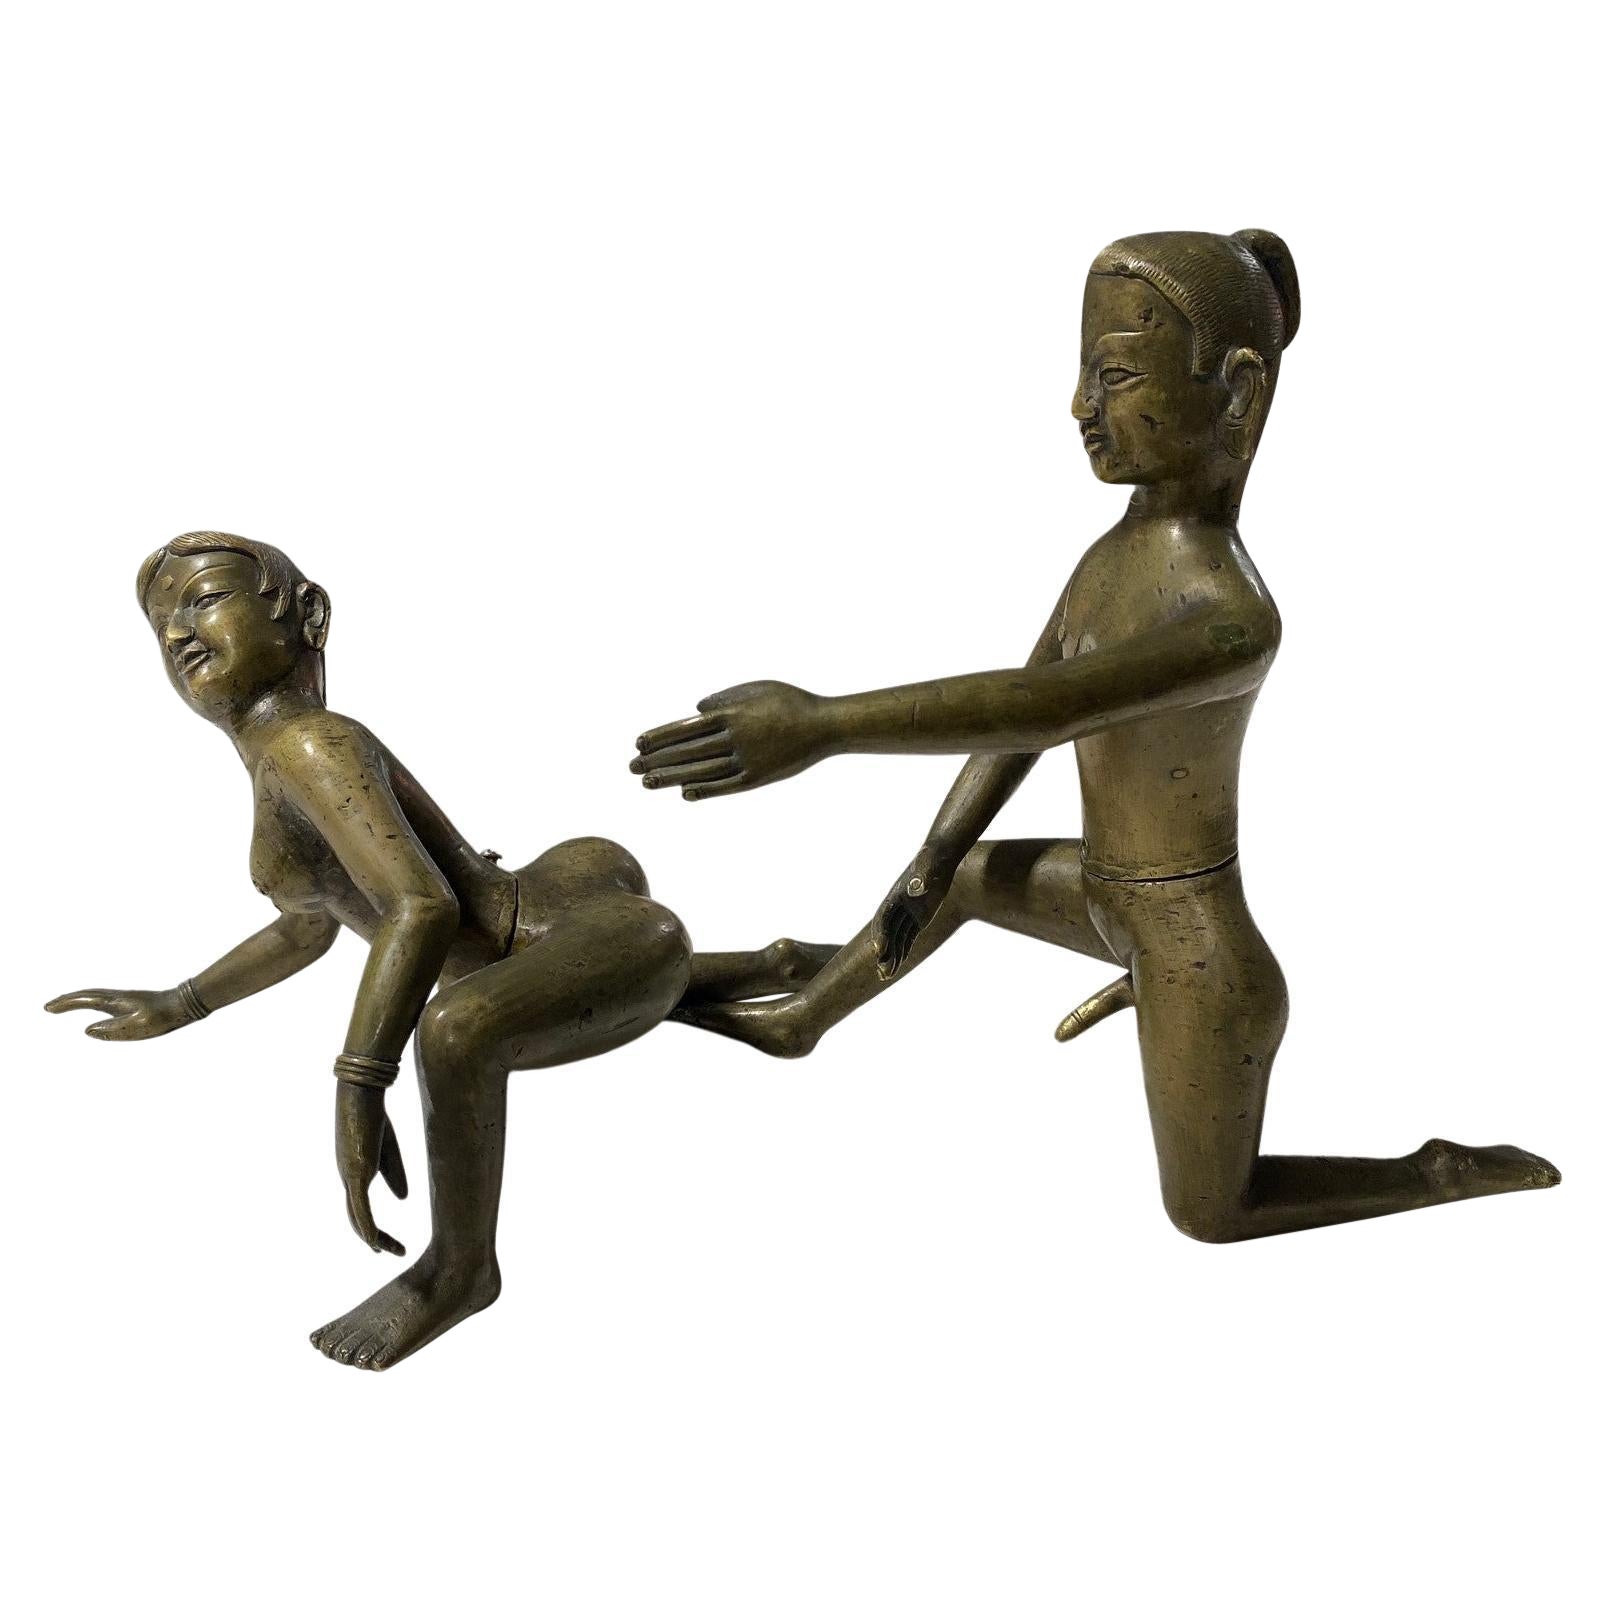 Skulptur Kama Sutra-Figuren aus schwerer Bronze, Indien, Südostasiatisch, erotisch, Kama Sutra im Angebot